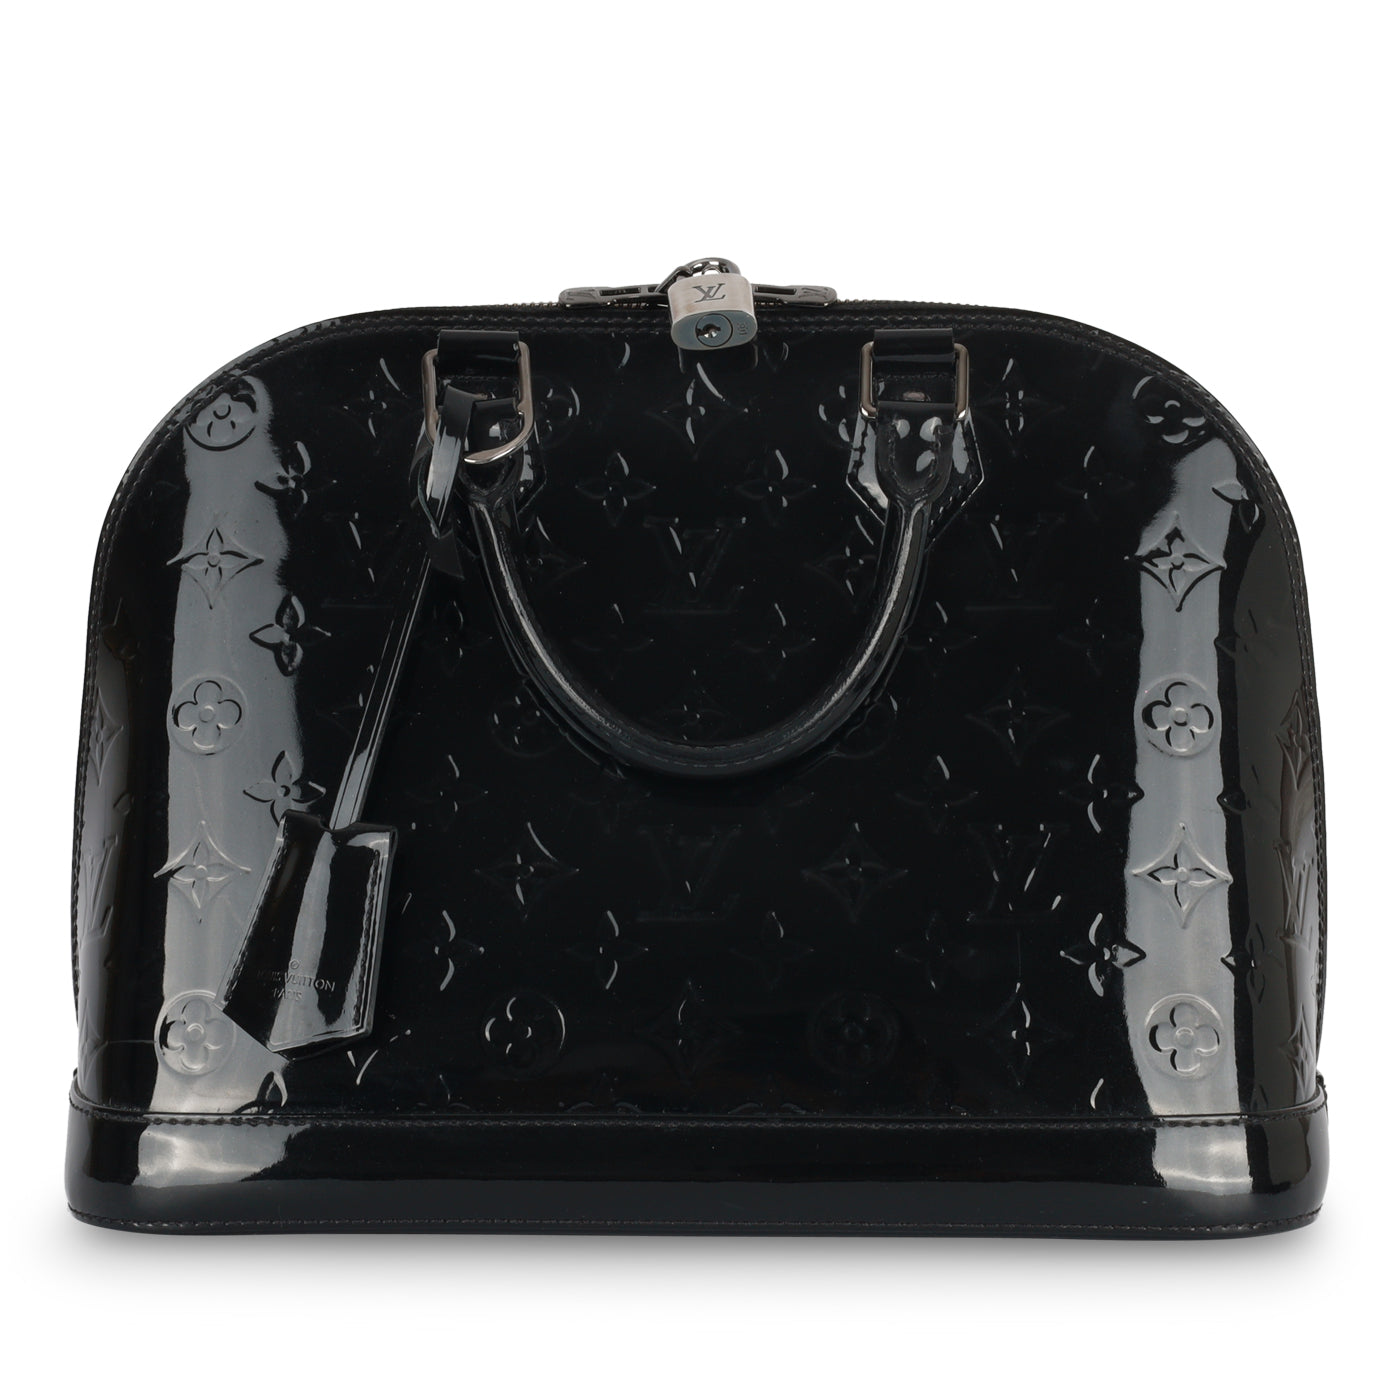 Alma bb patent leather handbag Louis Vuitton Silver in Patent